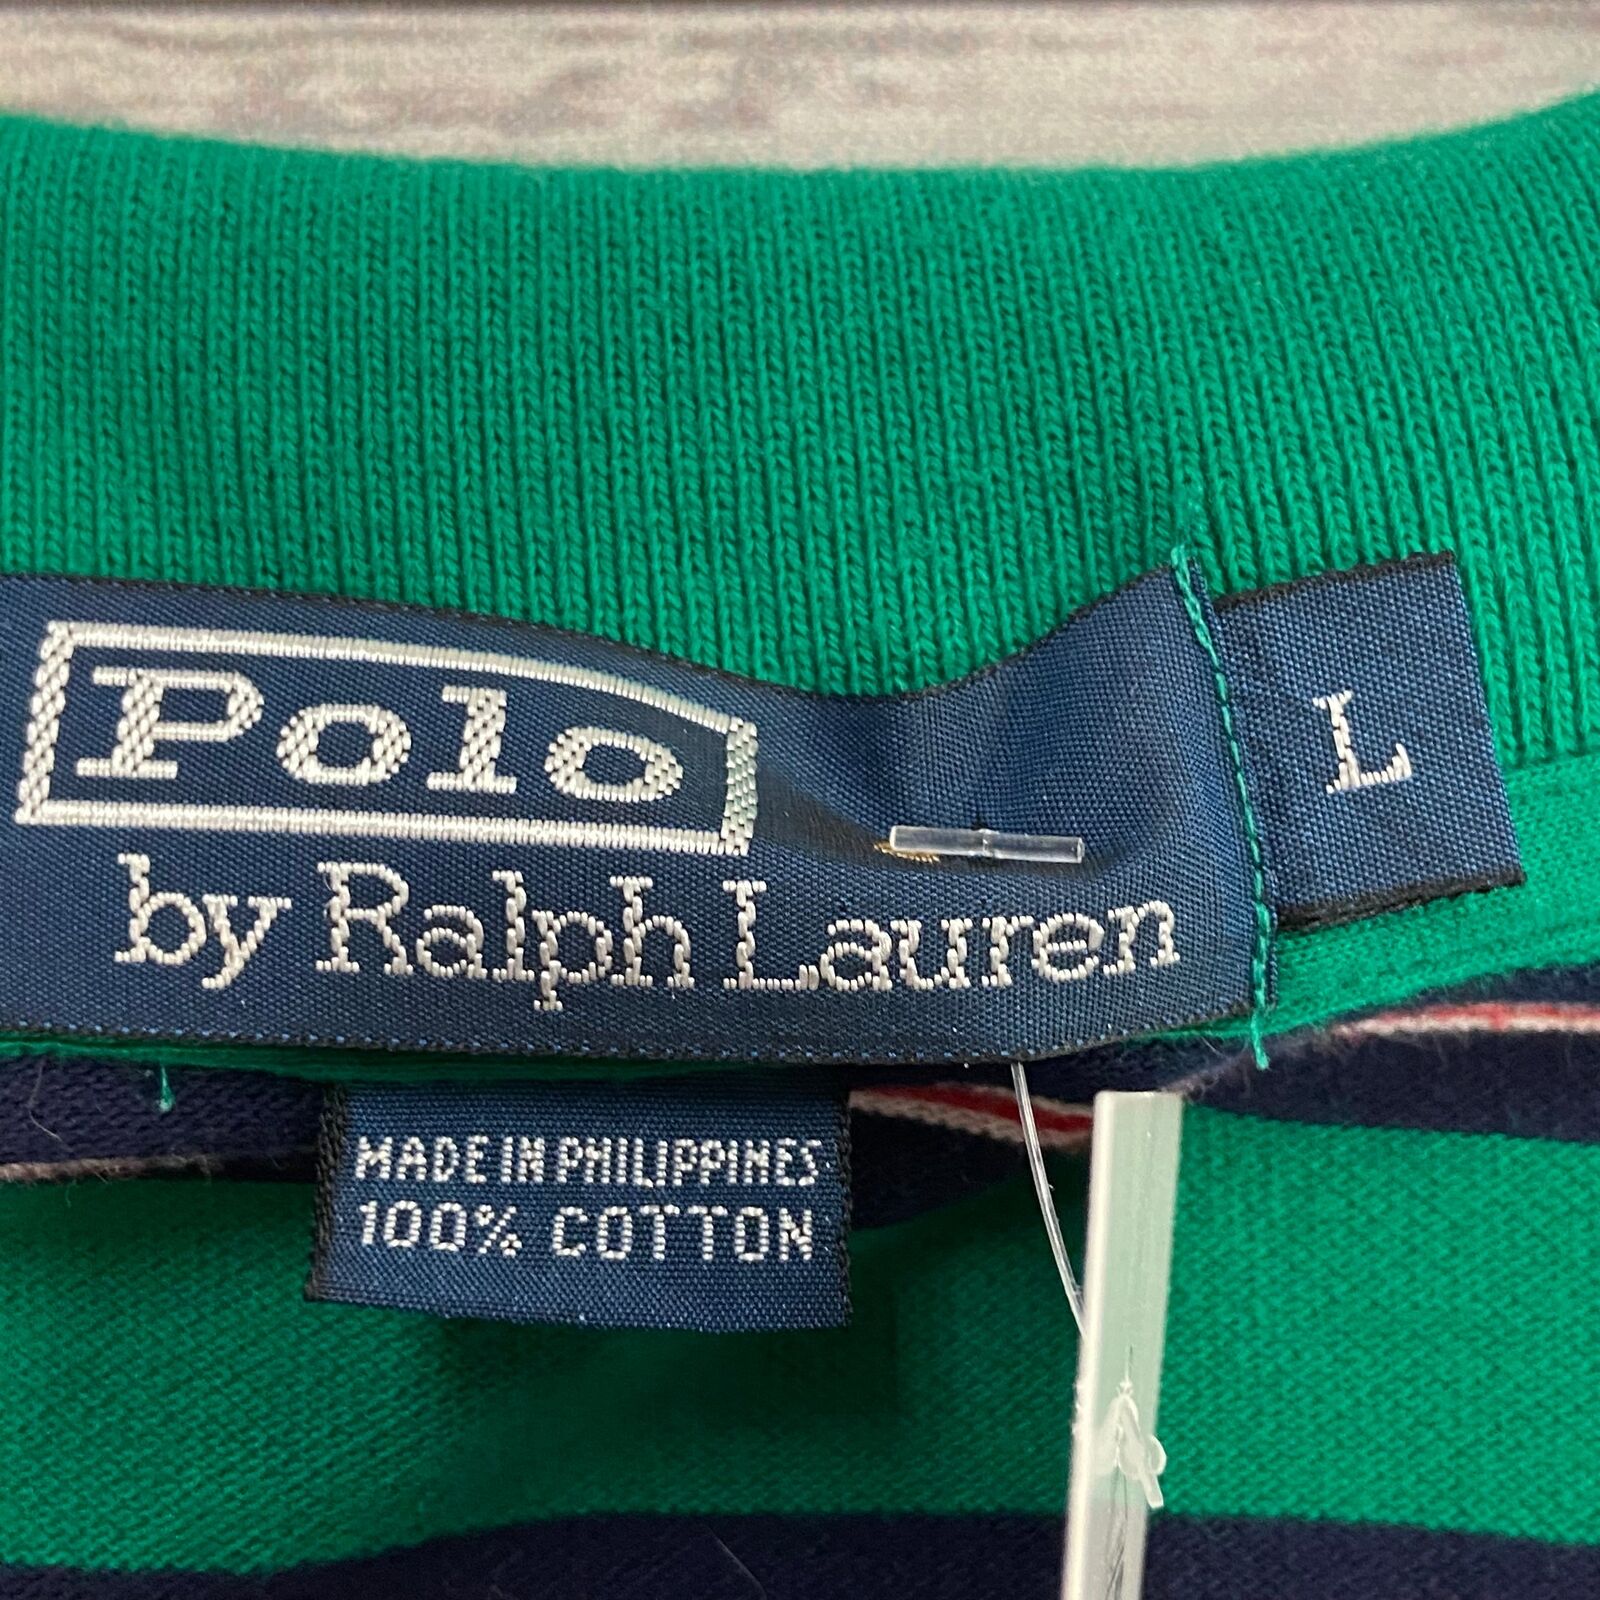 Polo Ralph Lauren in the Philippines